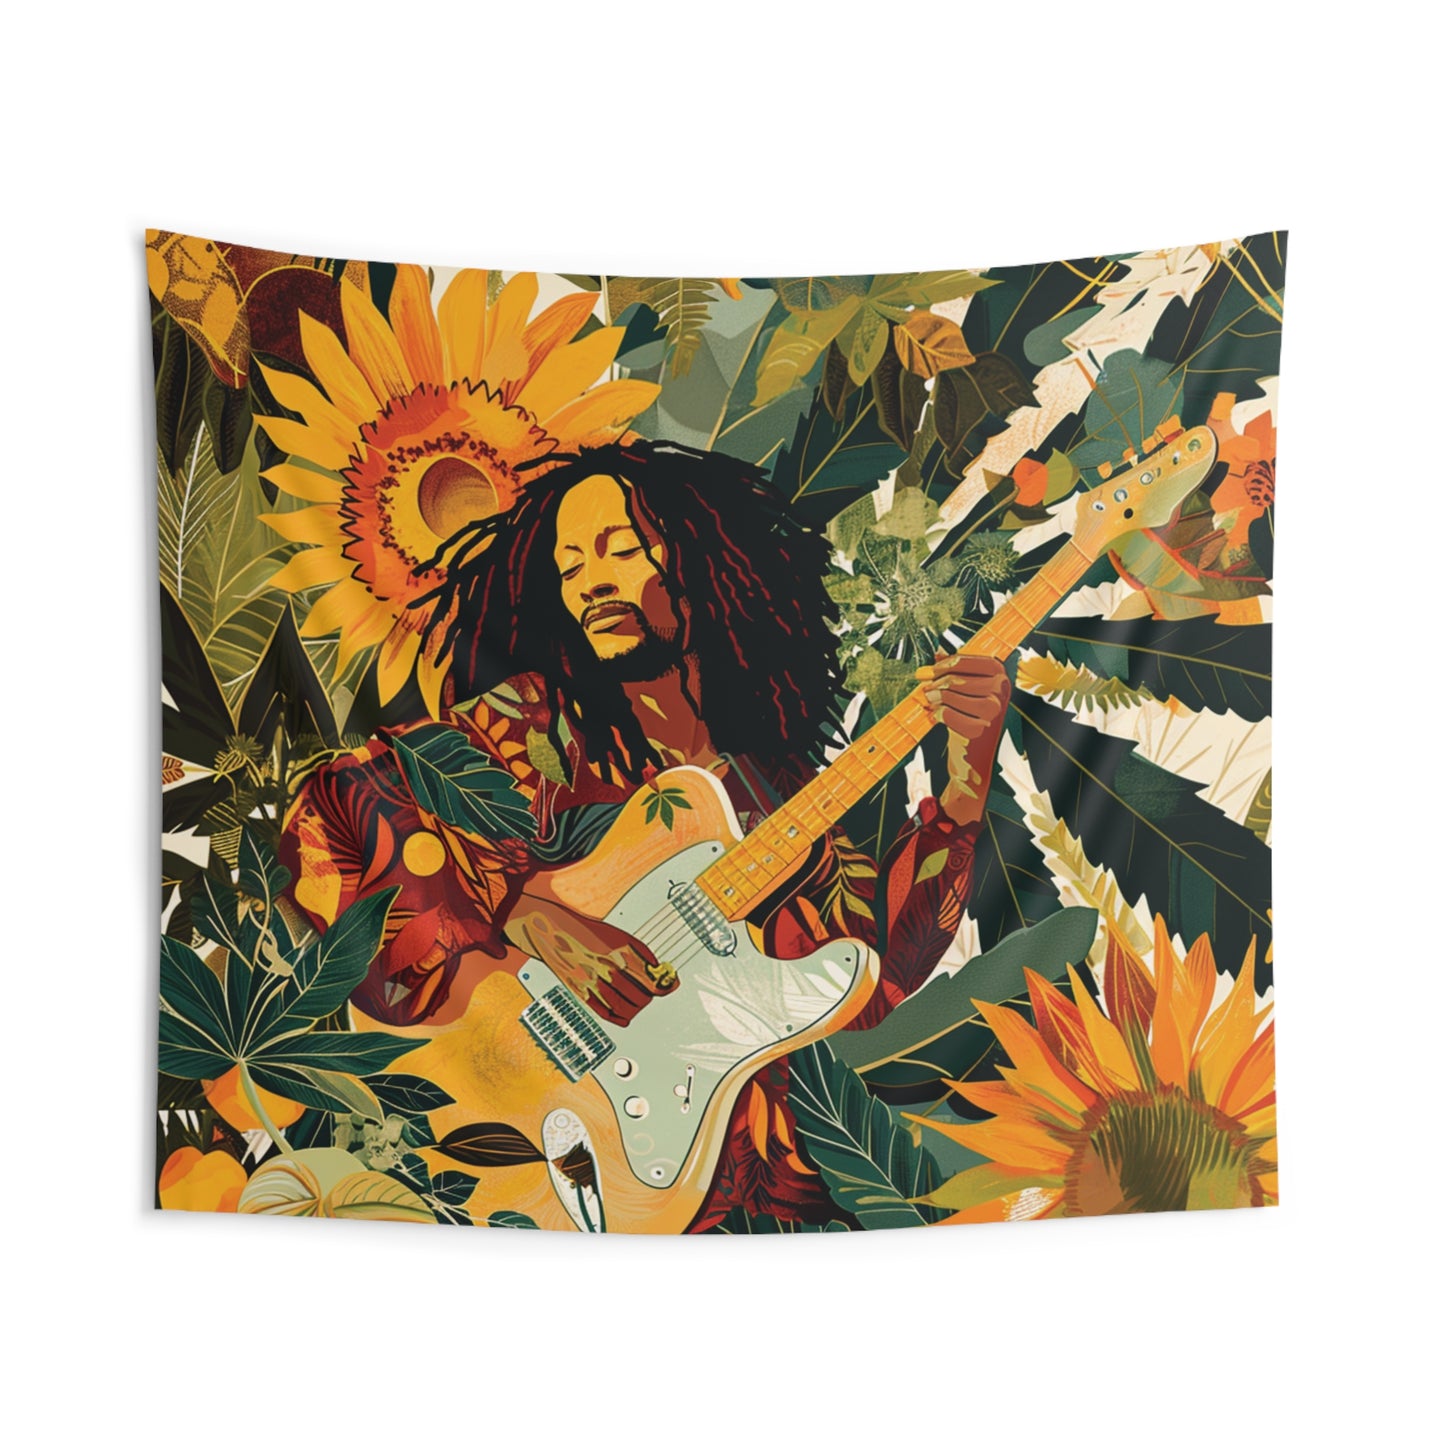 Bob Marley Portrait Collage Reggae Music Inspired Tapestry